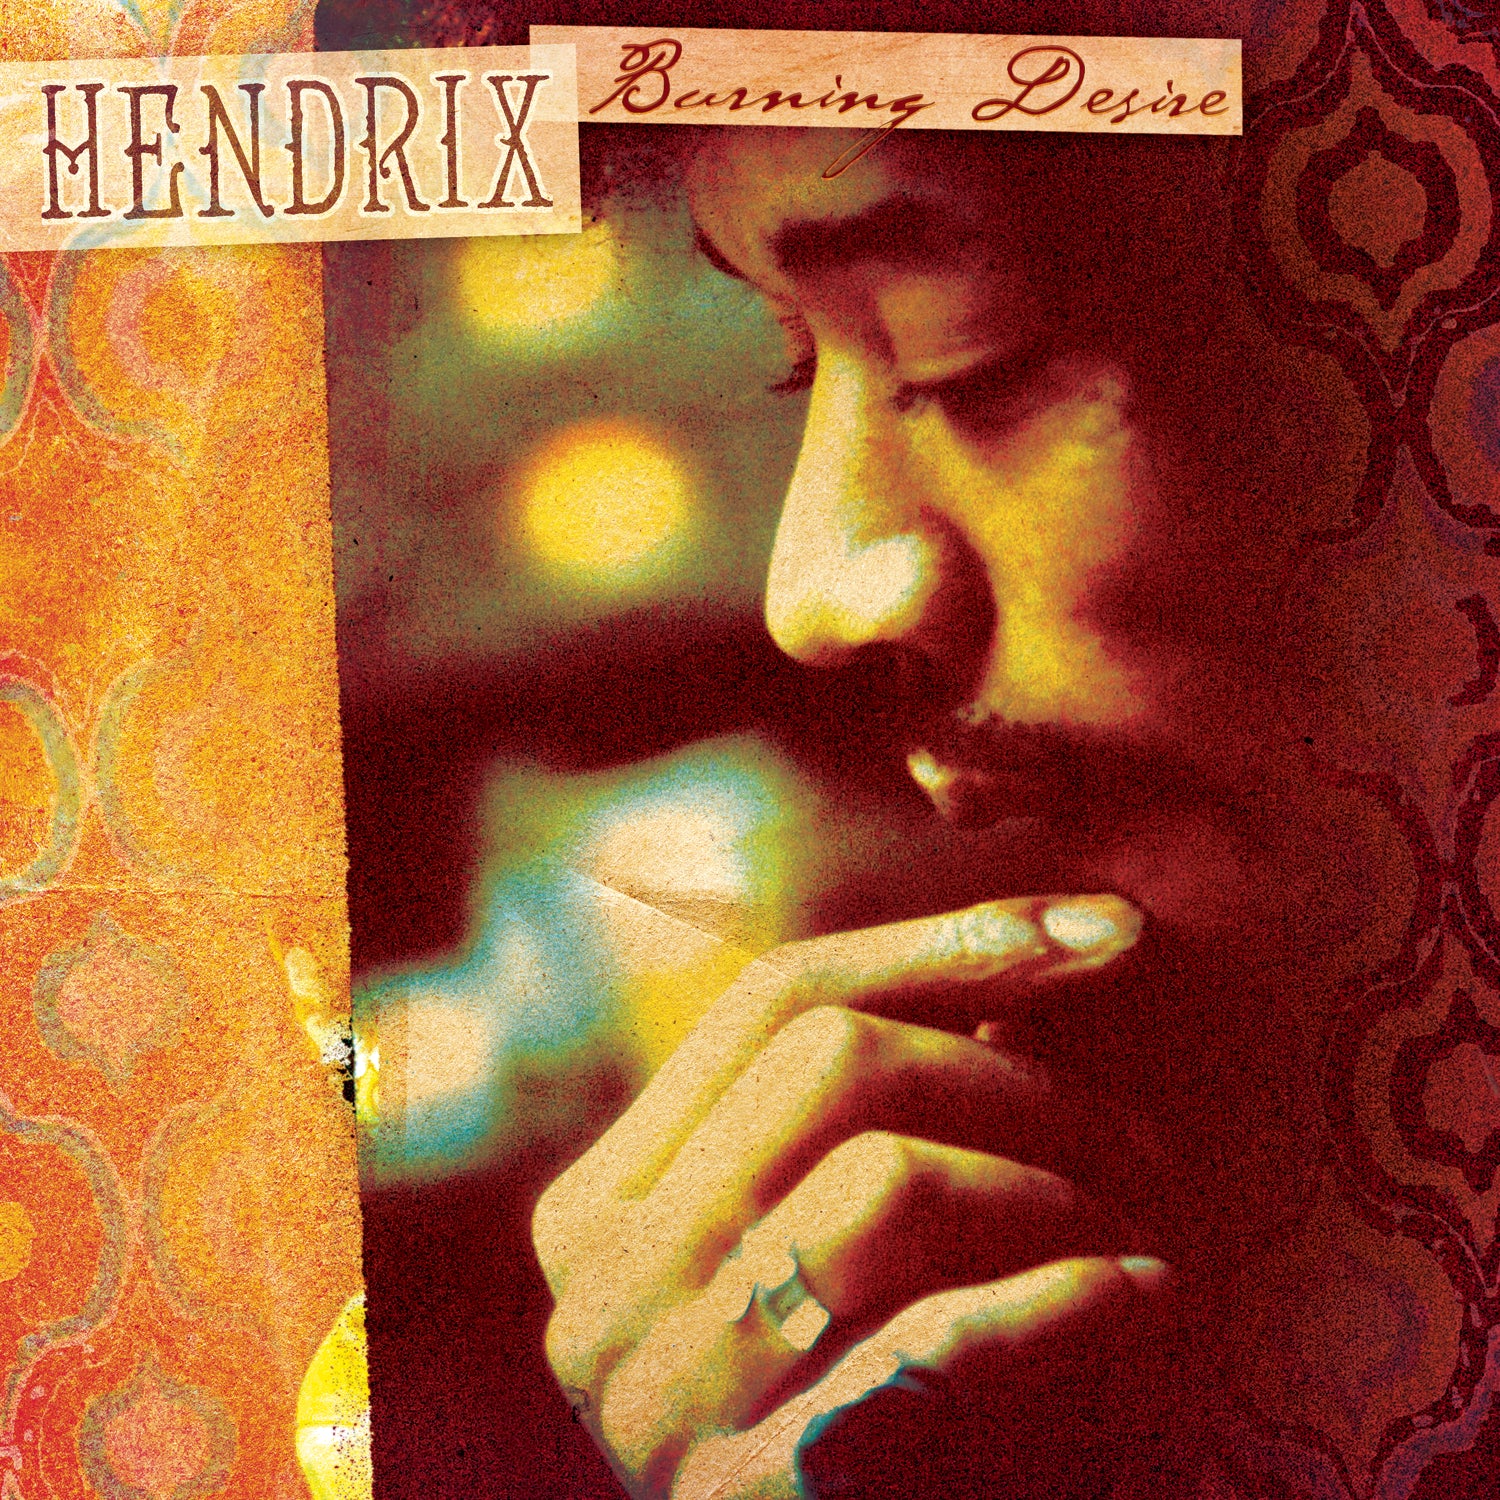 Jimi Hendrix - Burning Desire 2LP (RSD Exclusive, Clear Orange And Red Vinyl)